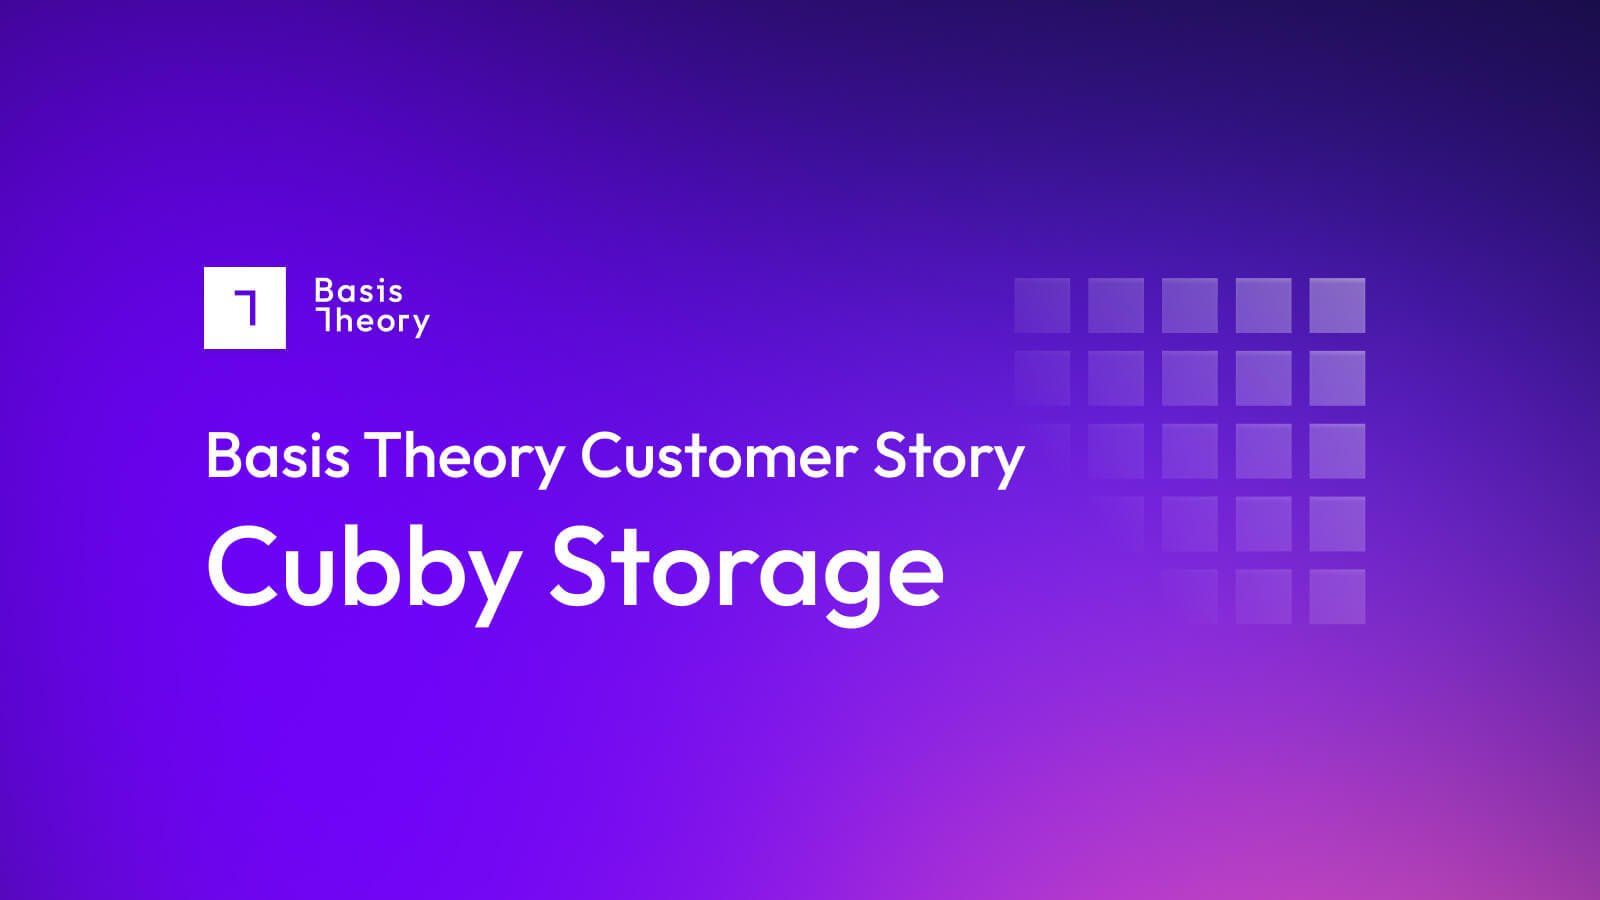 Cubby storage